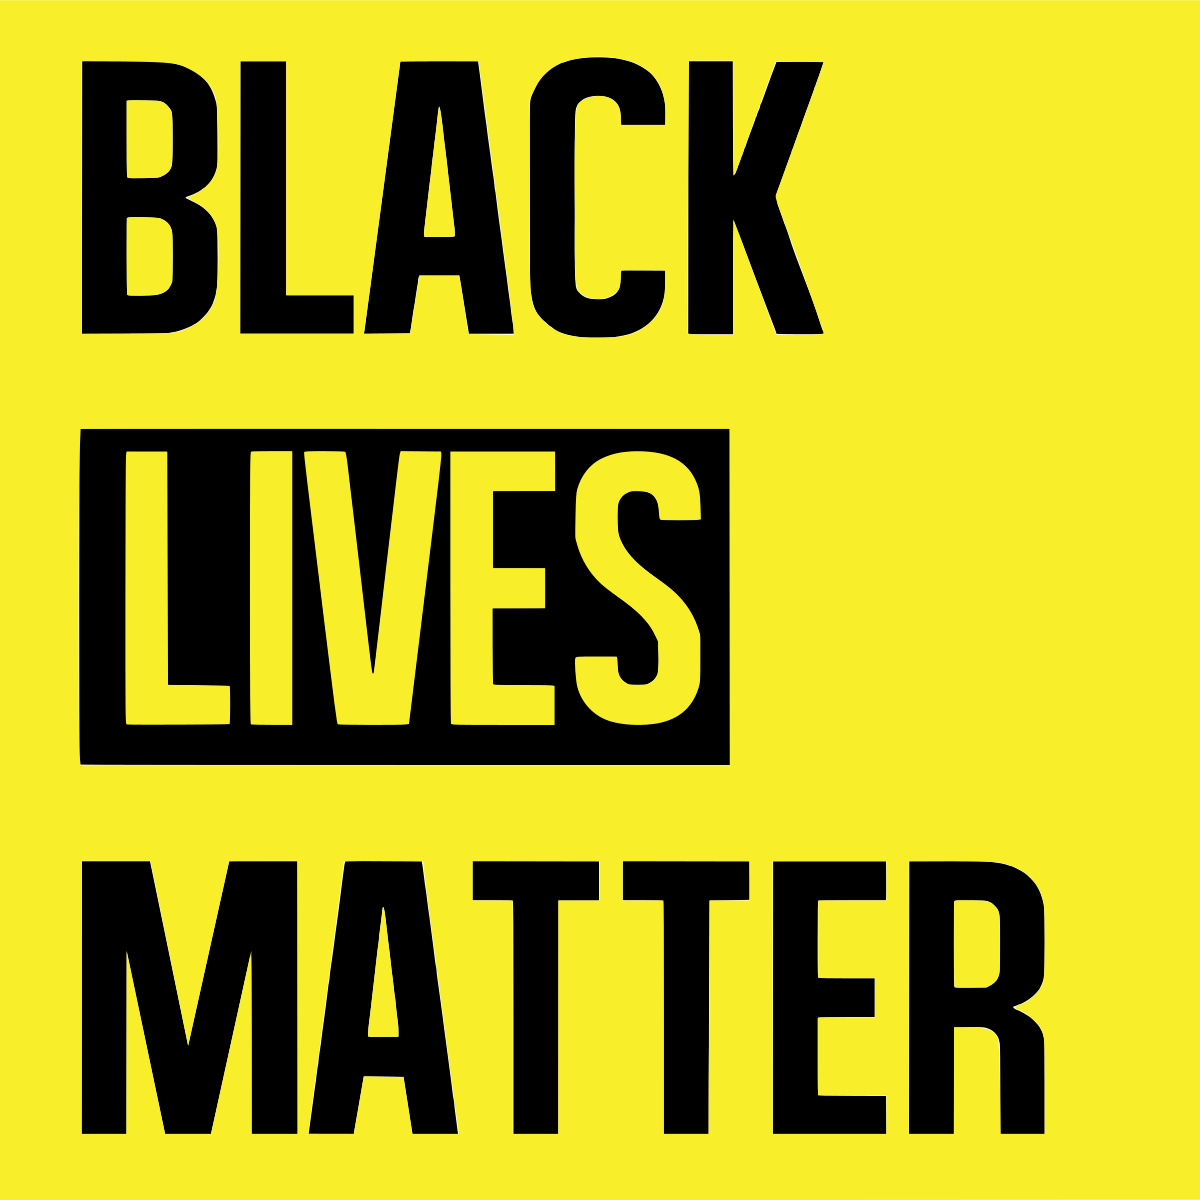 Black Lives Matter - Wikipedia